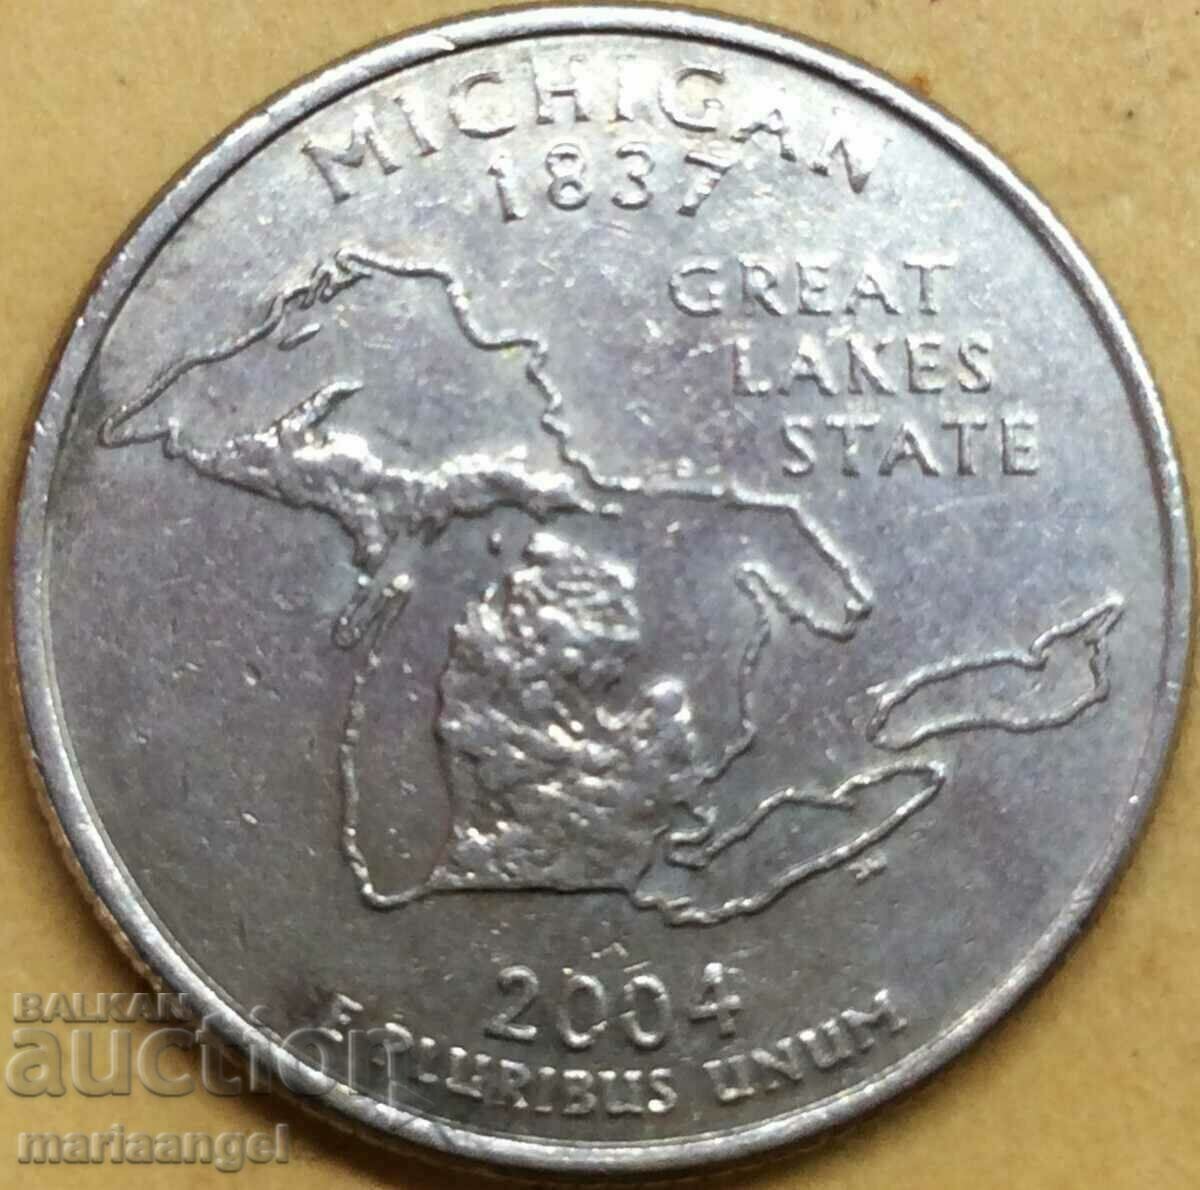 US Quarter Quarter Dollar 2004